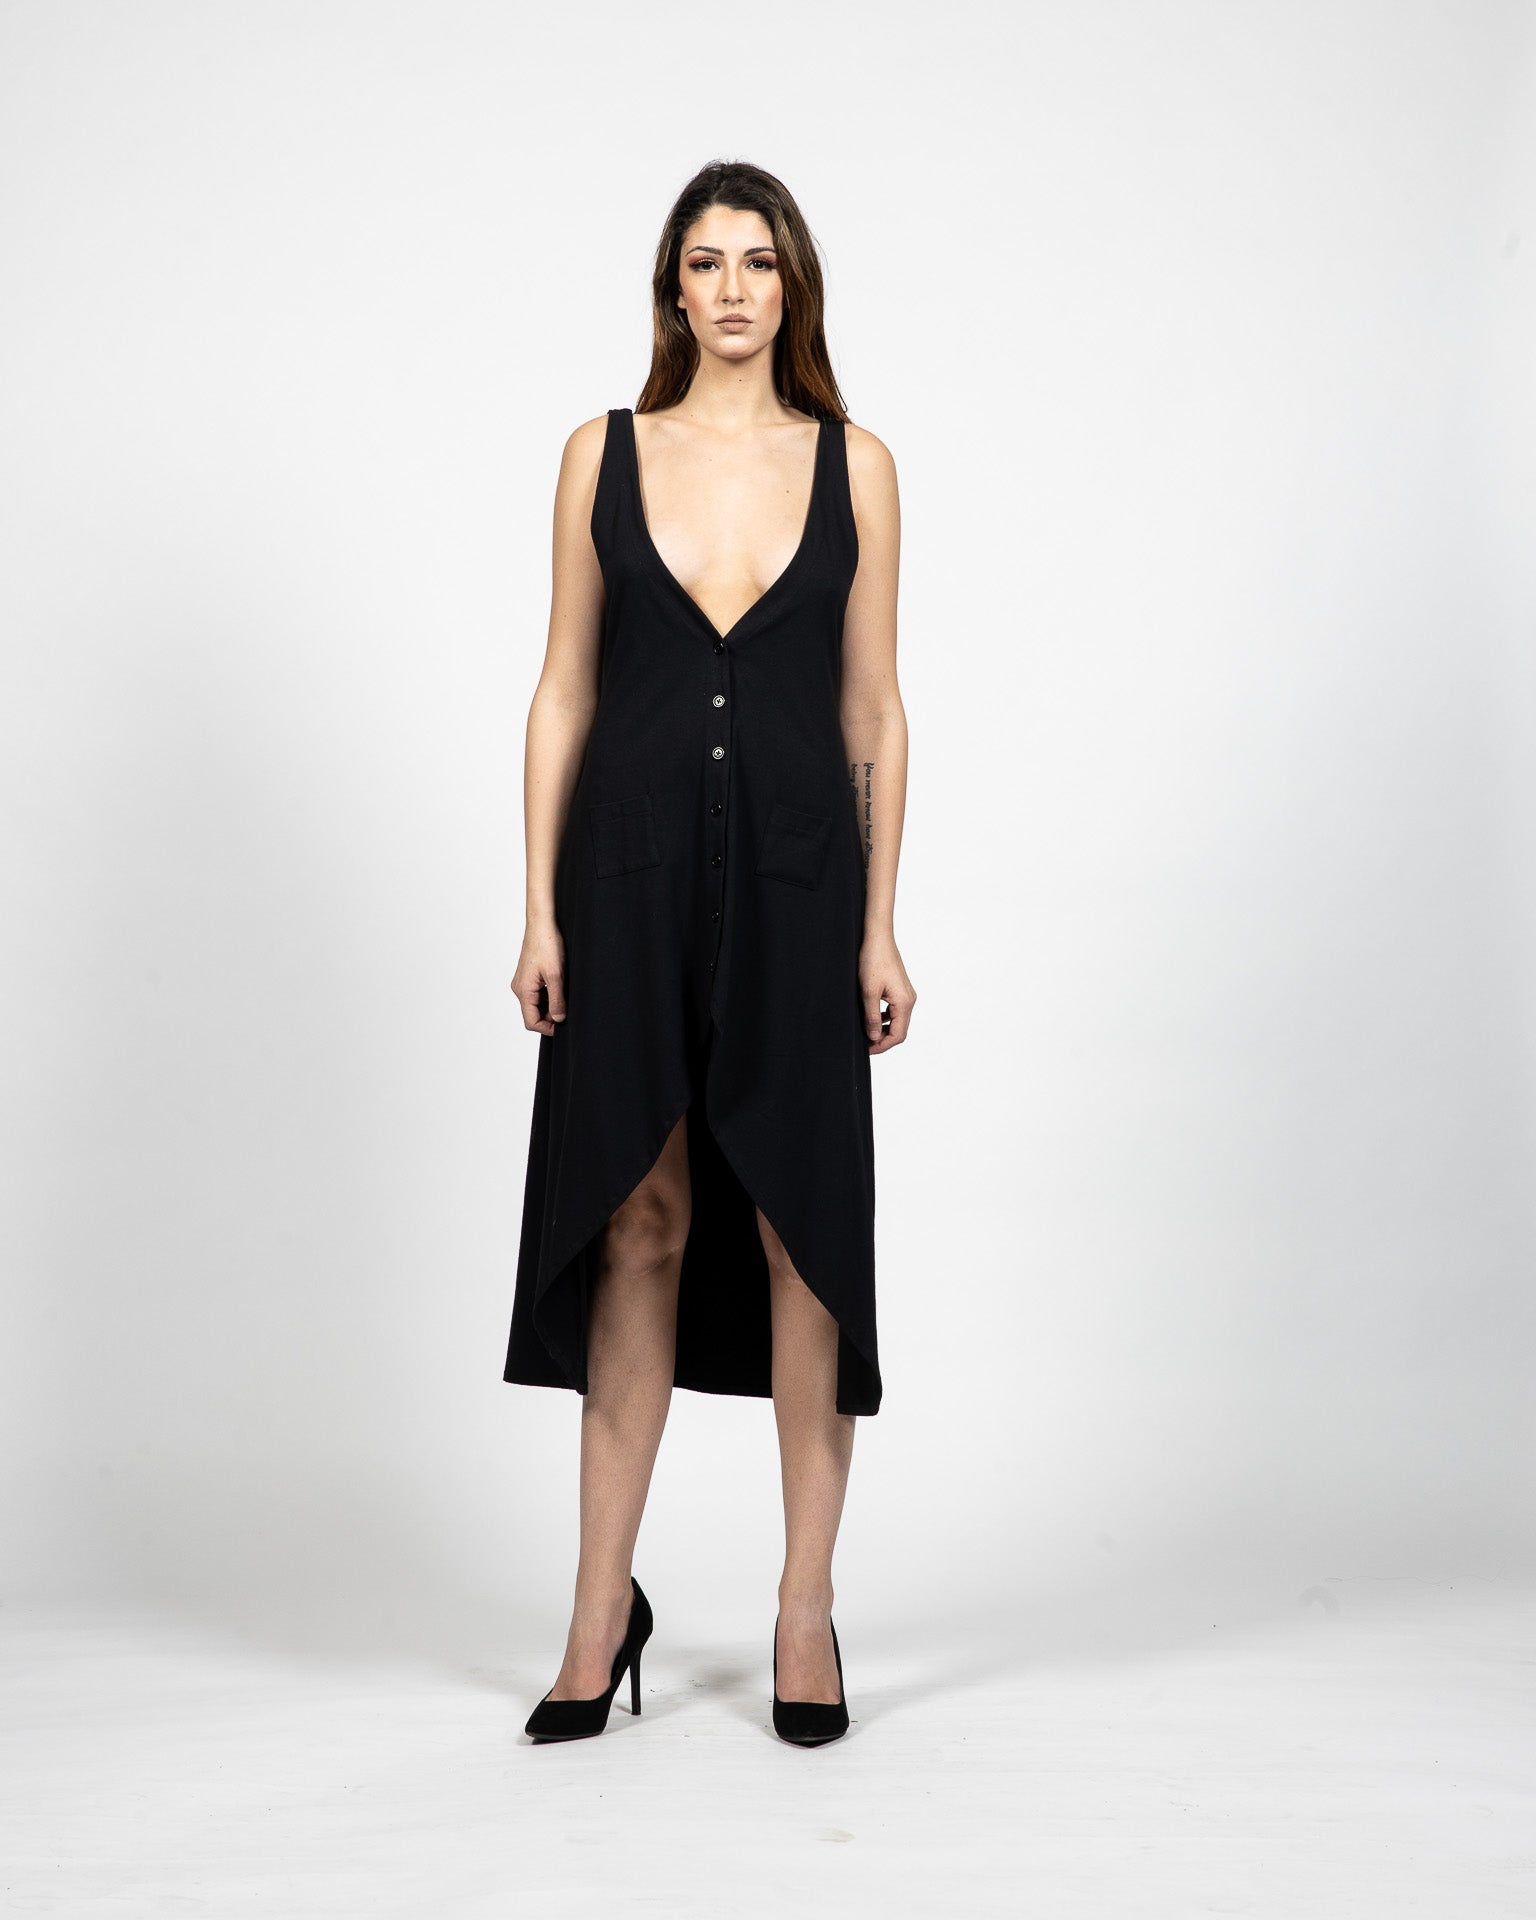 Deep V – Neckline Buttoned Black Dress - Front View - Samuel Vartan